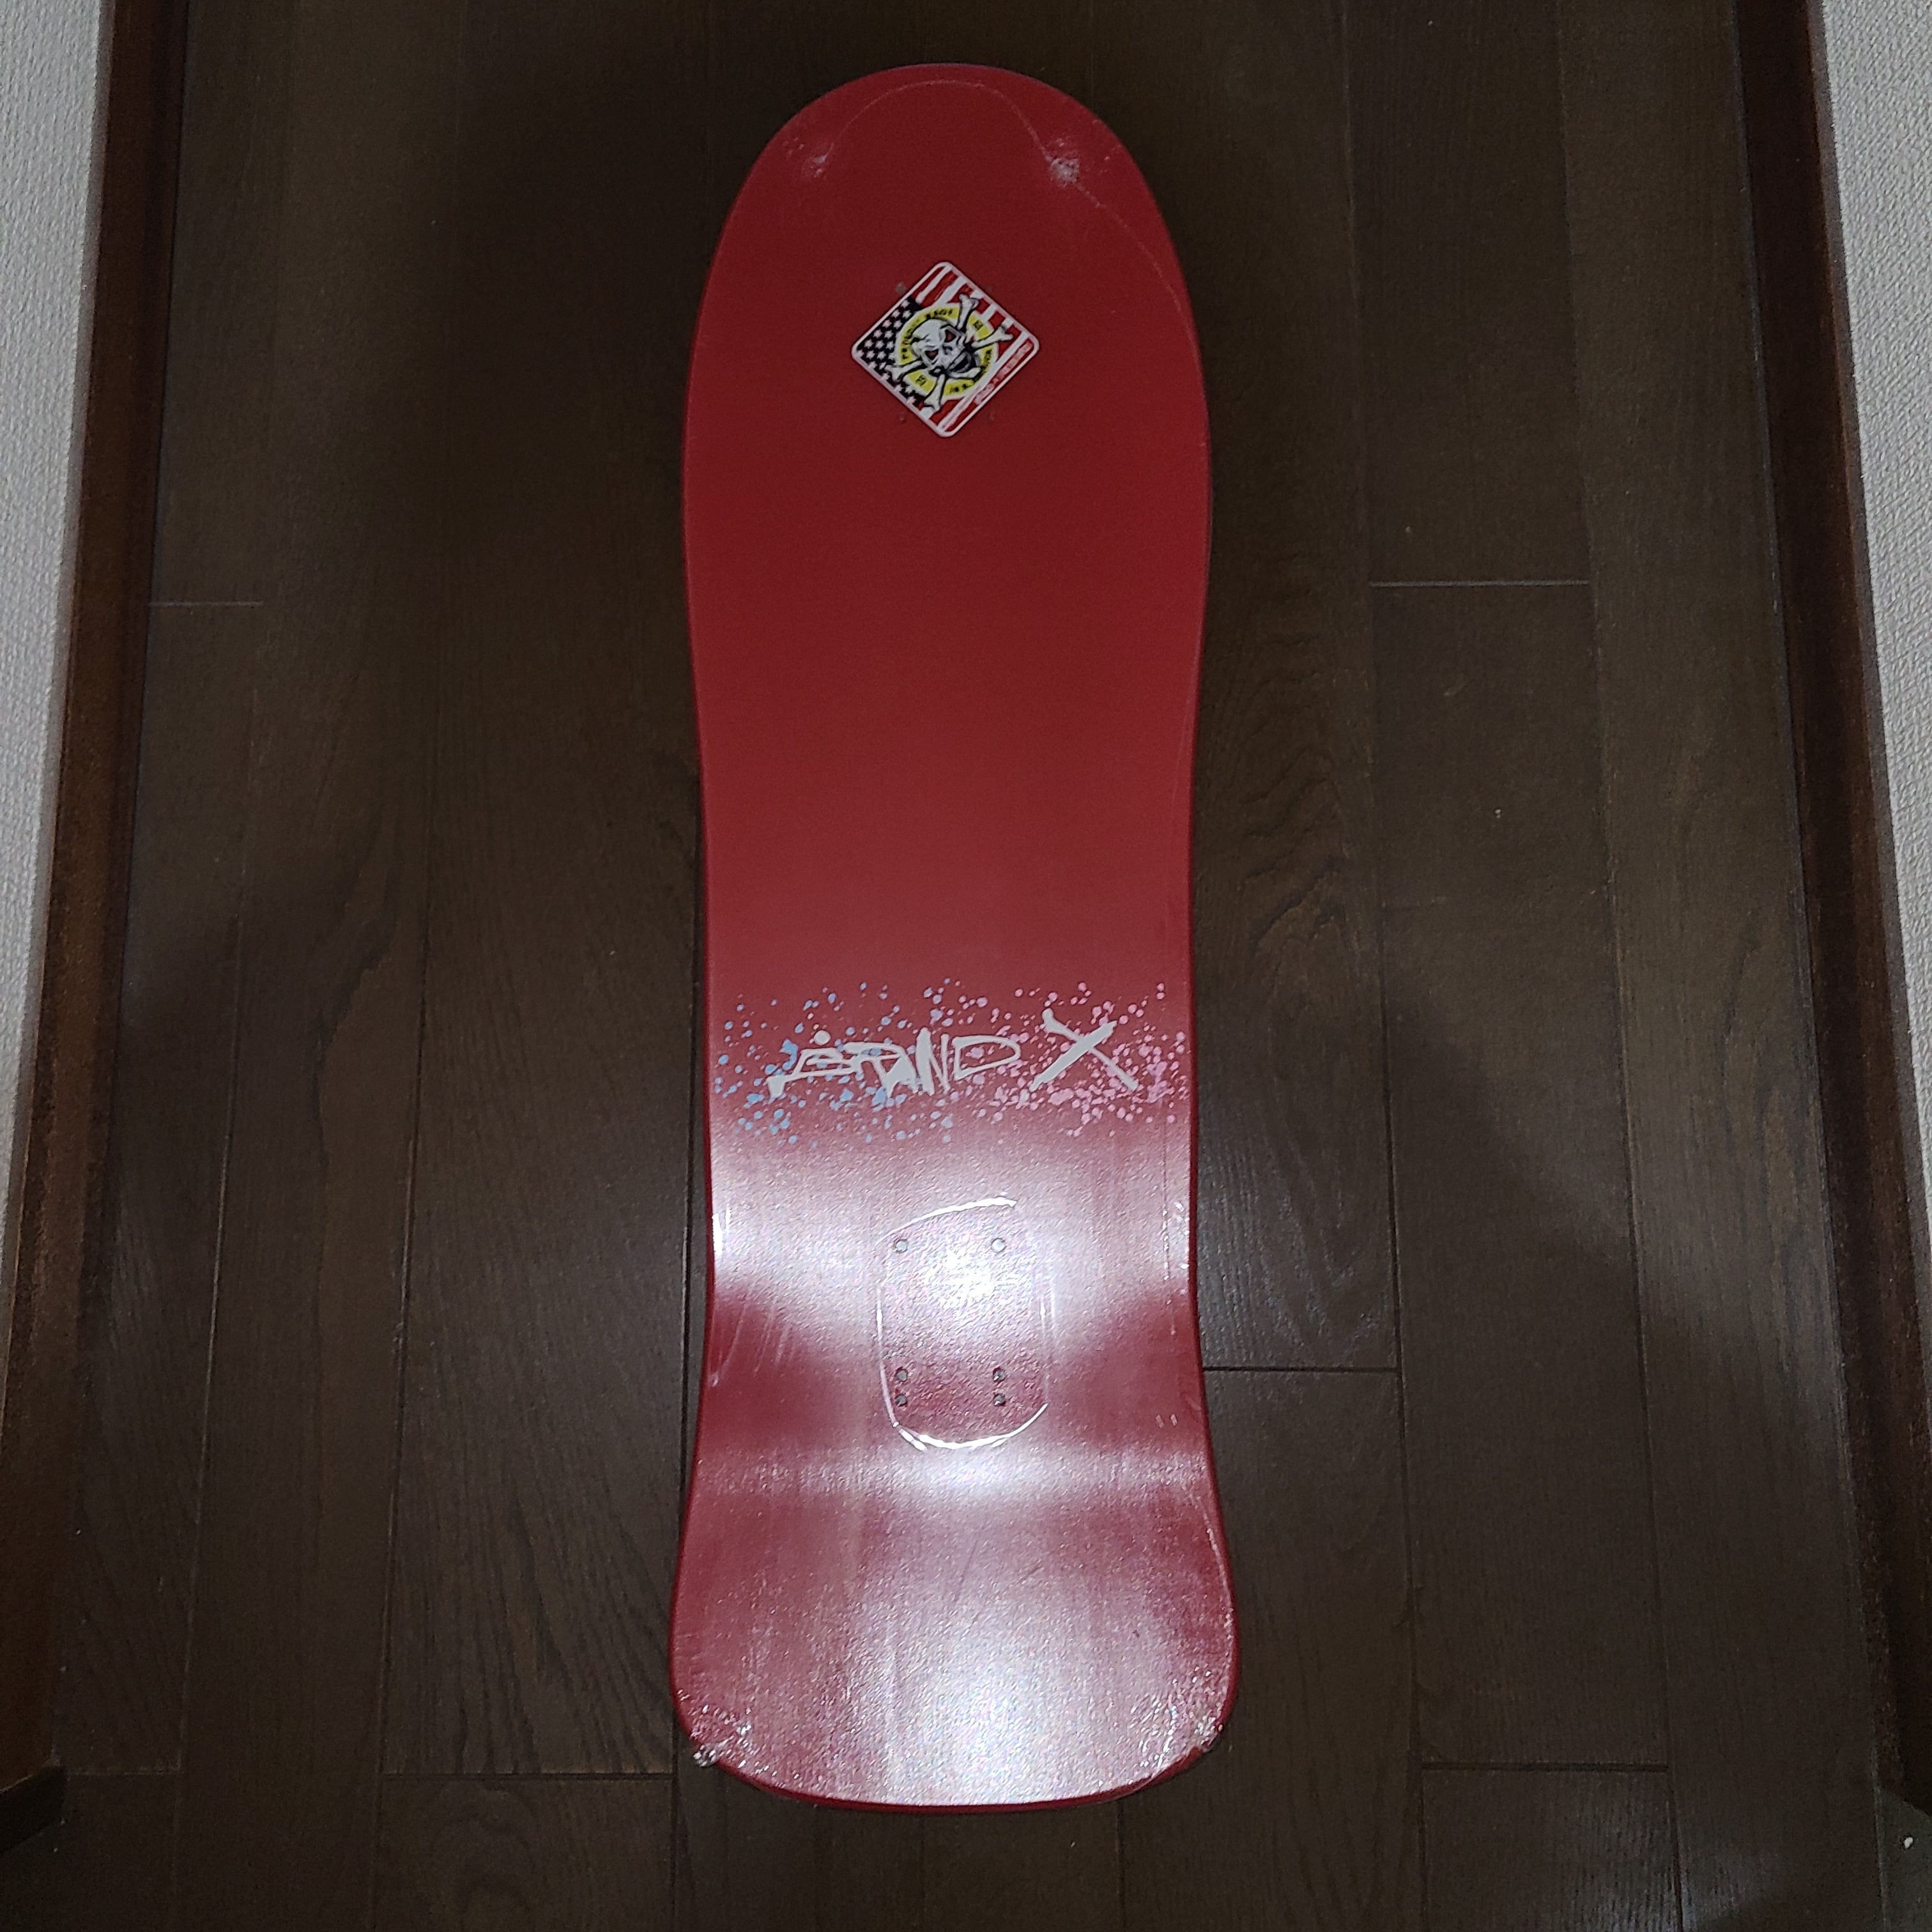 Brand X Skateboards Dogma3 30/100 Ltd サイン入り スケートボード